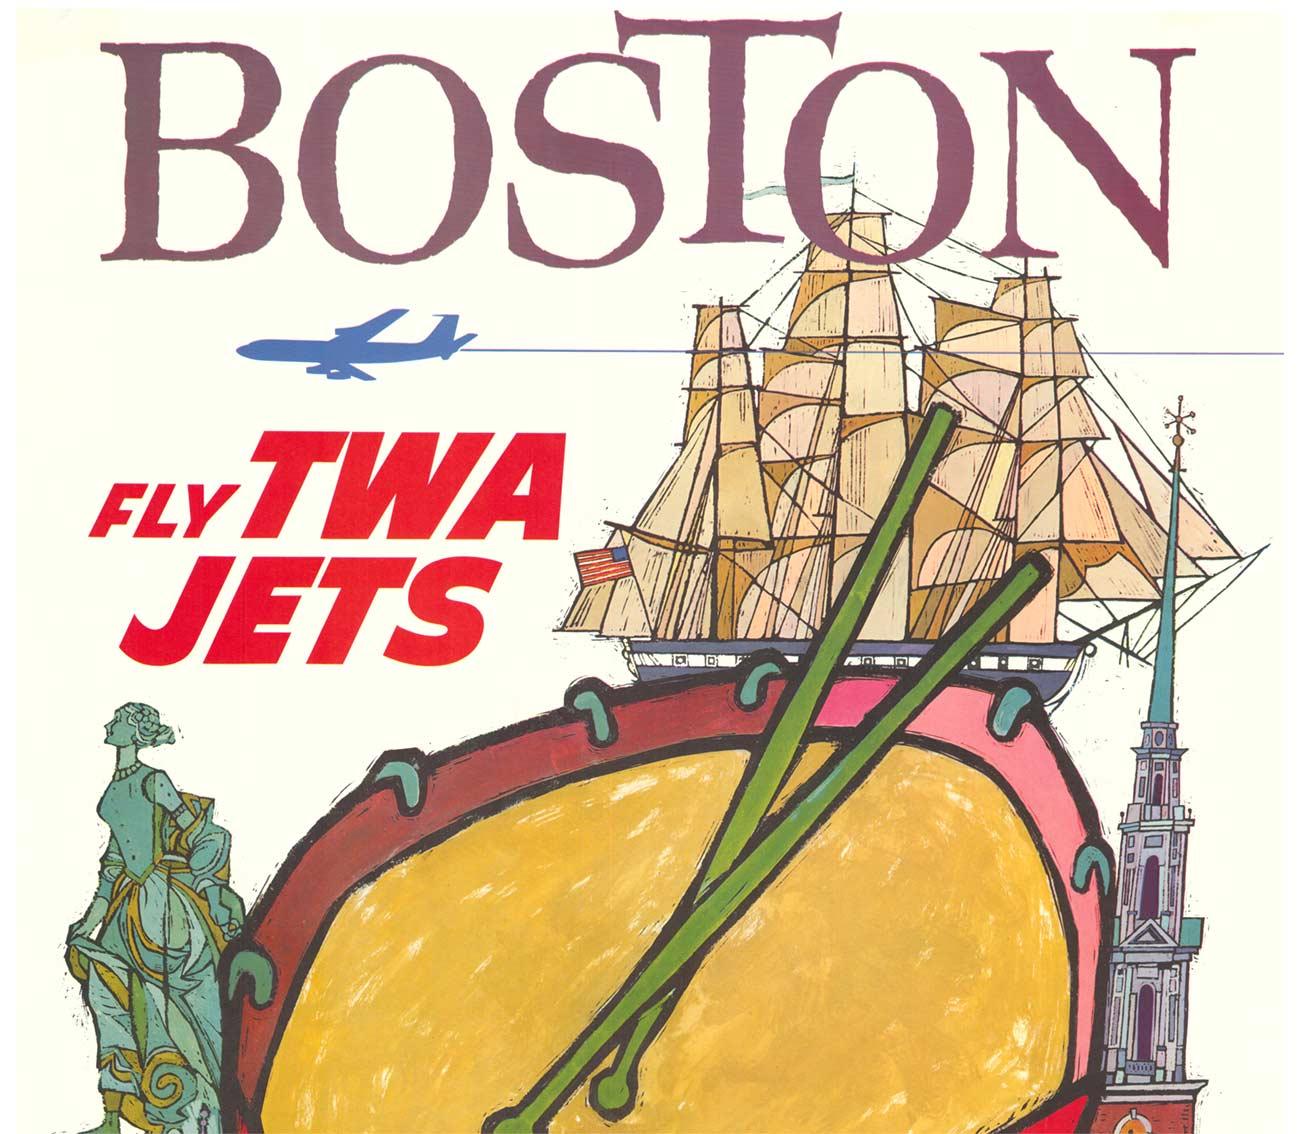 Origiinal Boston Fly TWA Jets vintage American travel poster - Print by David Klein